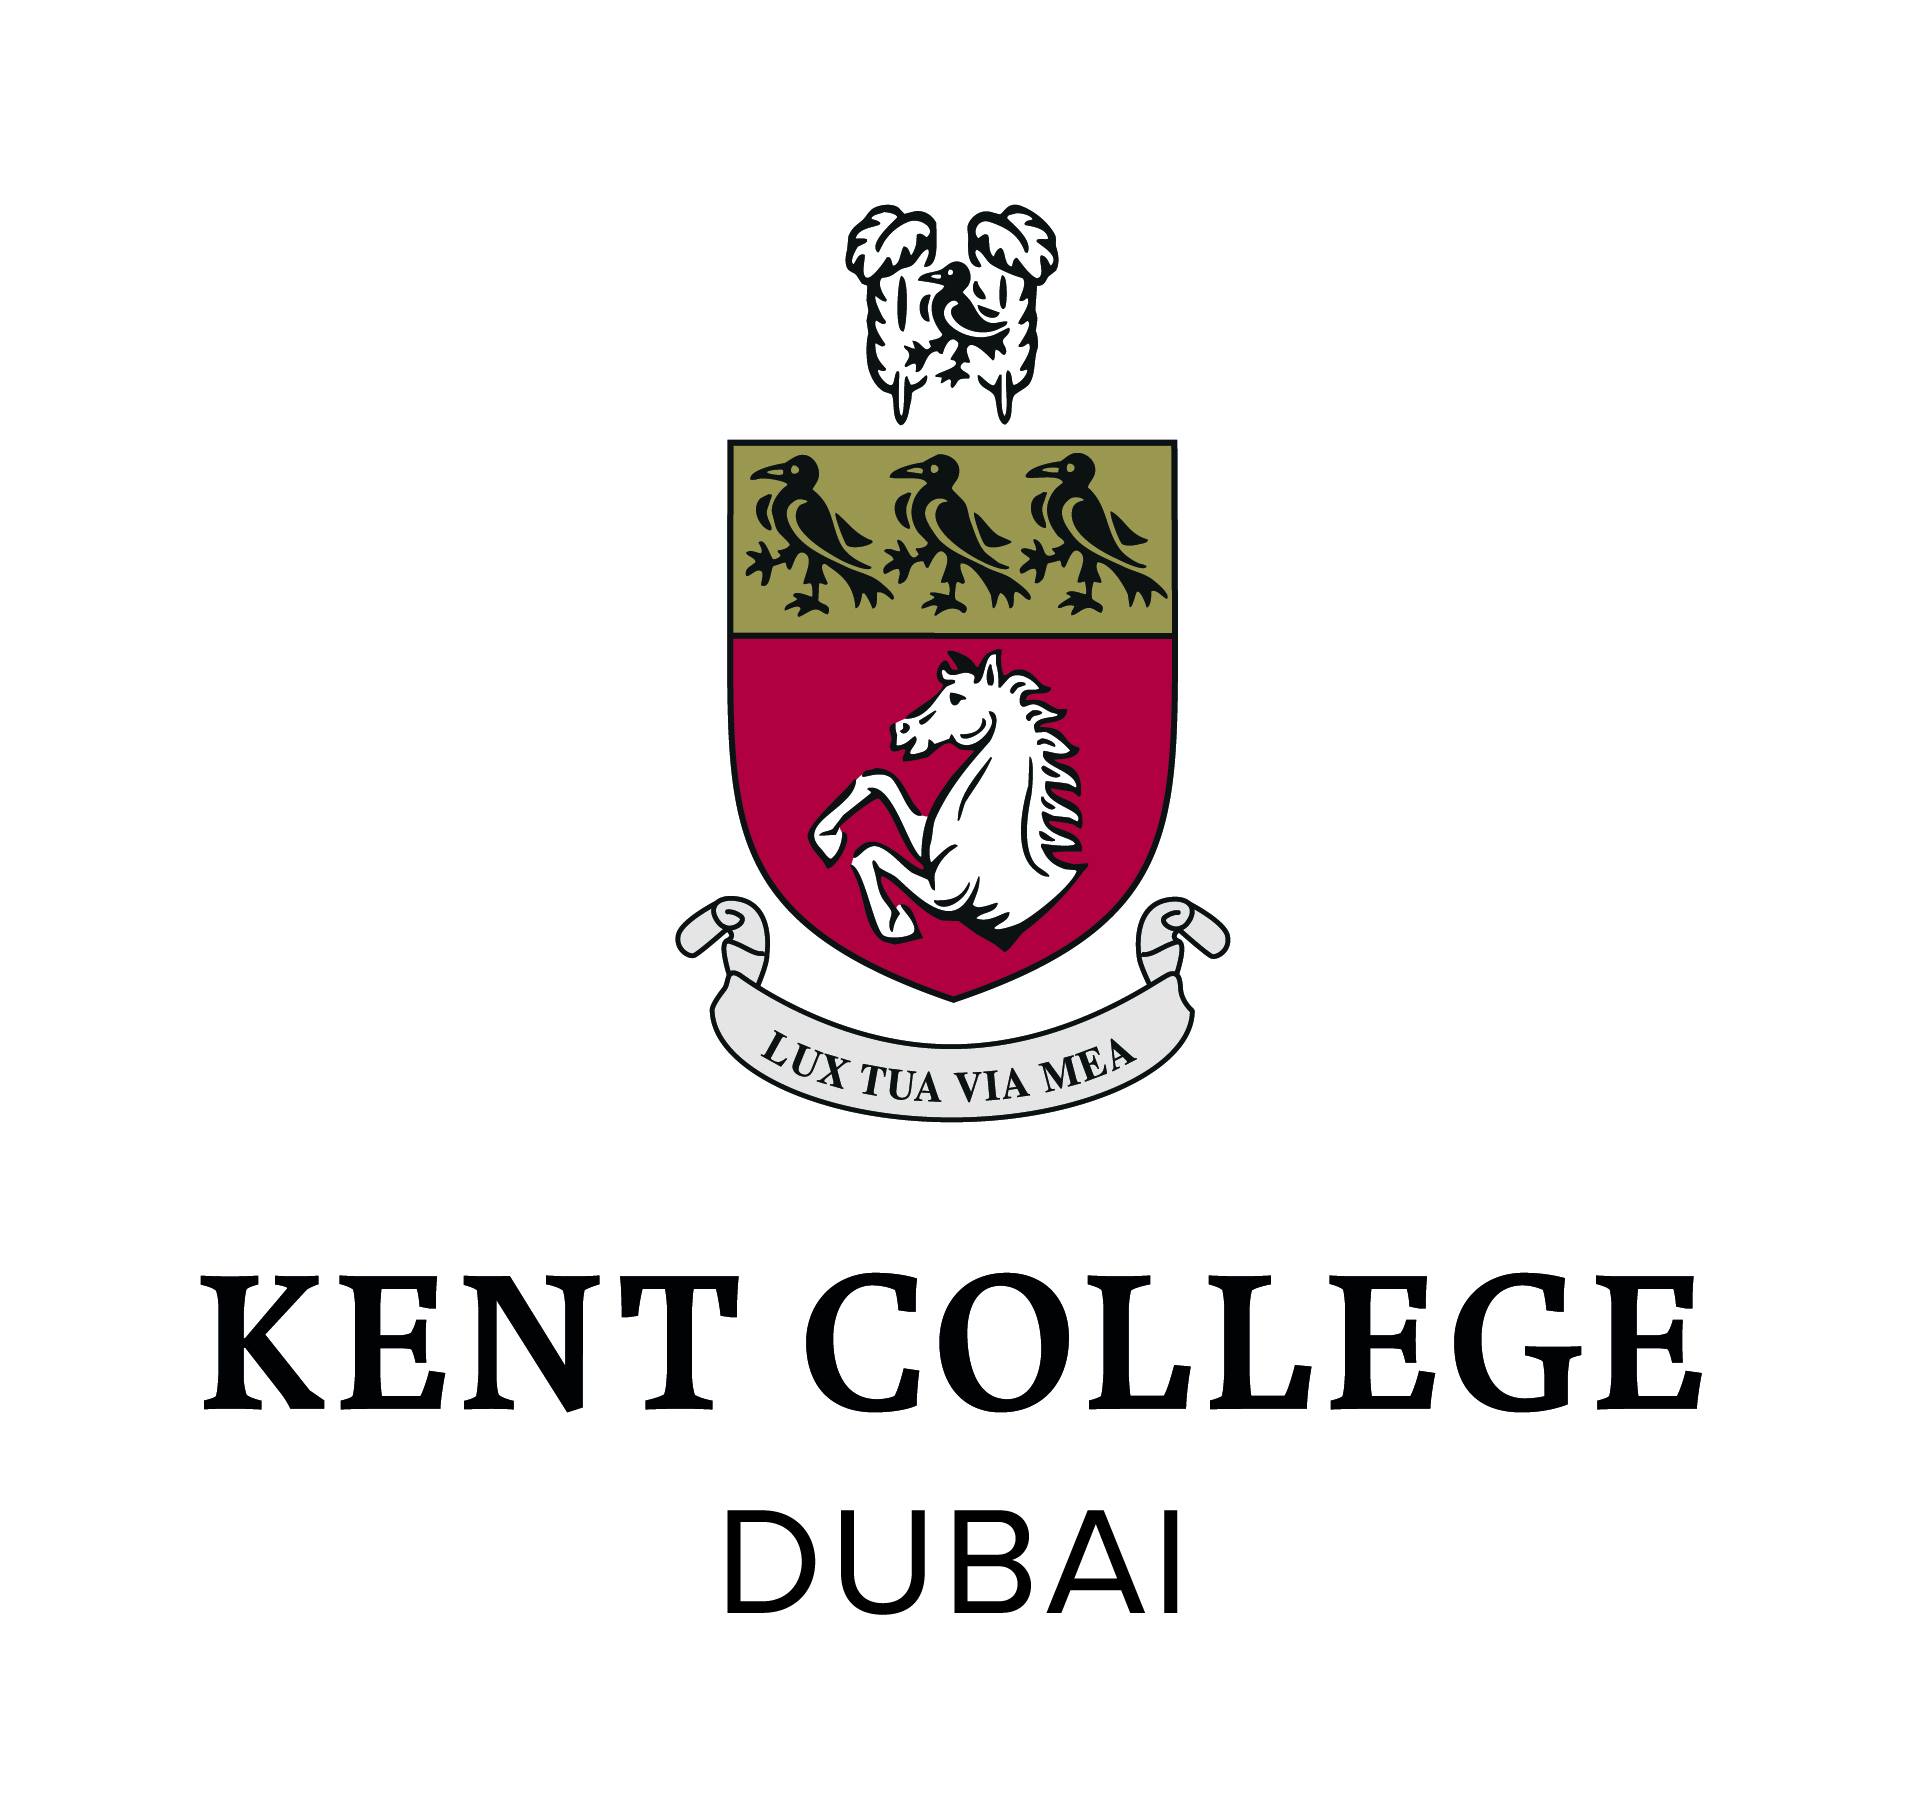 Kent College Dubai